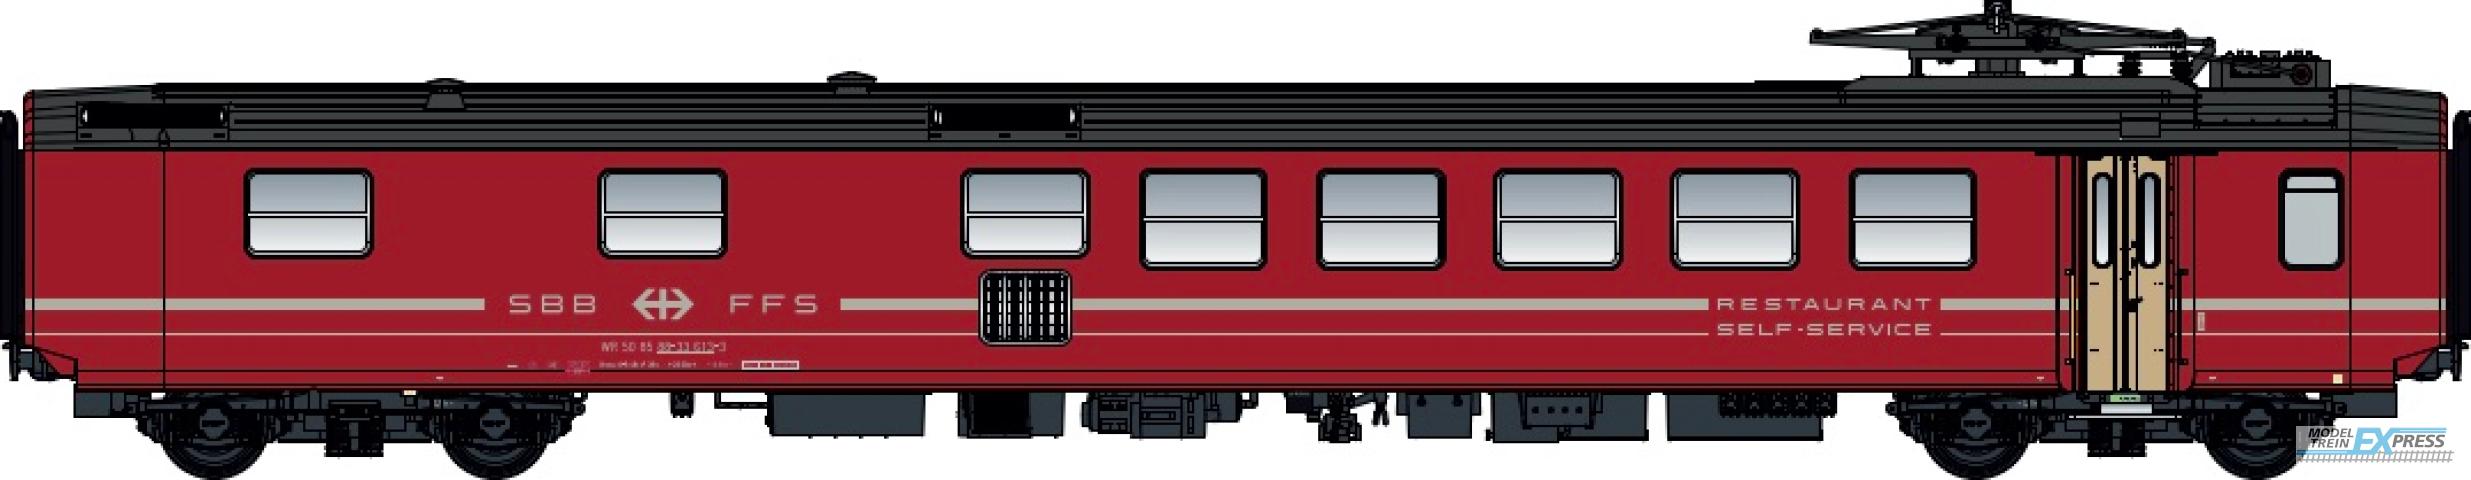 LS Models 47262DC EW I, rood, grijs dak, witte lijn, CFF-SBB logo, Restaurant Self-Service opschrift  /  Ep. IV  /  SBB  /  HO  /  DC  /  1 P.